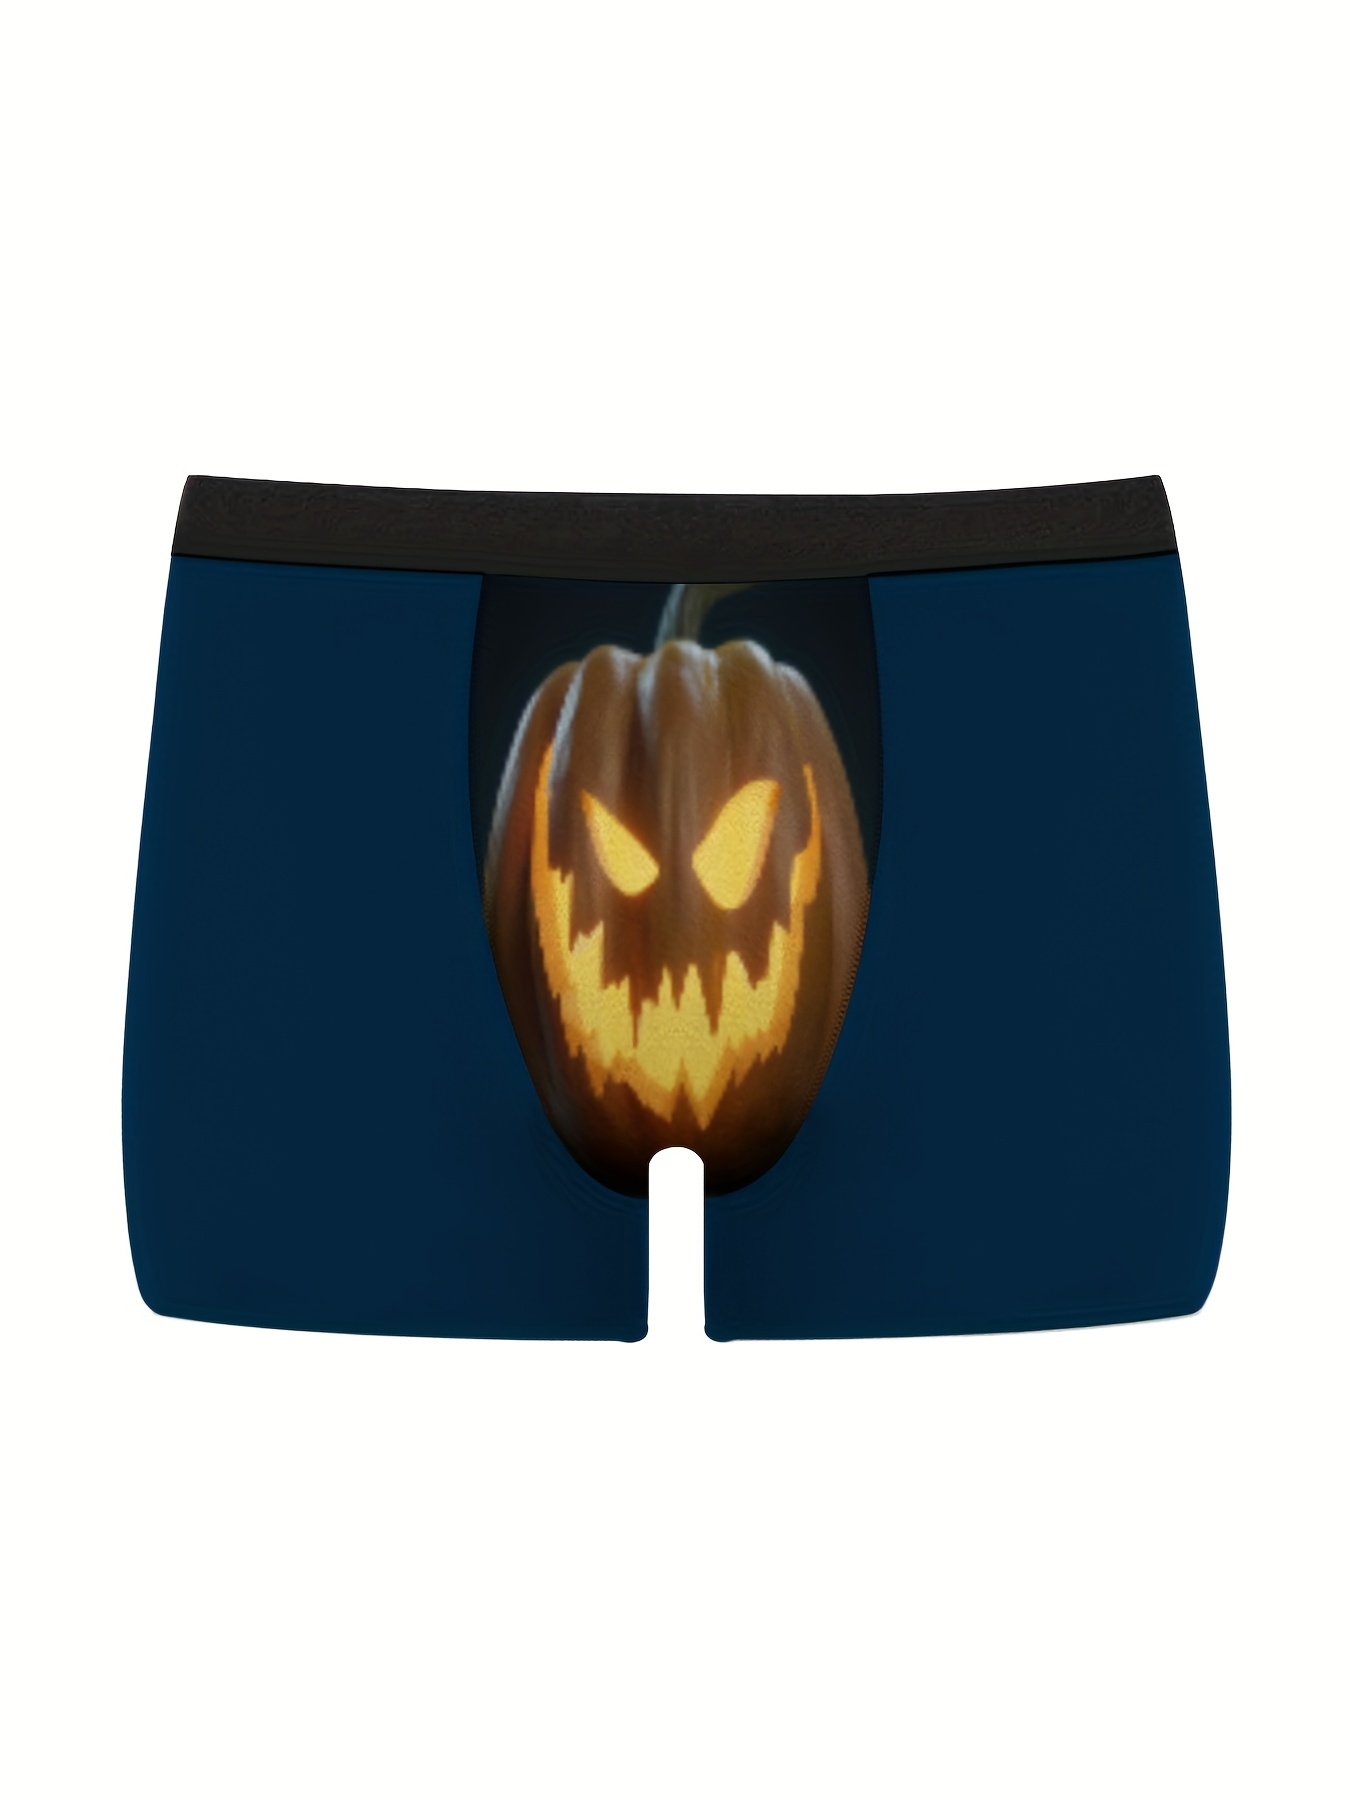 1 Pc Halloween Pumpkin Digital Printed Men's Underwear, Long Boxer Briefs  Shorts, ComfortableBreathable Stretchy Boxers Trunks